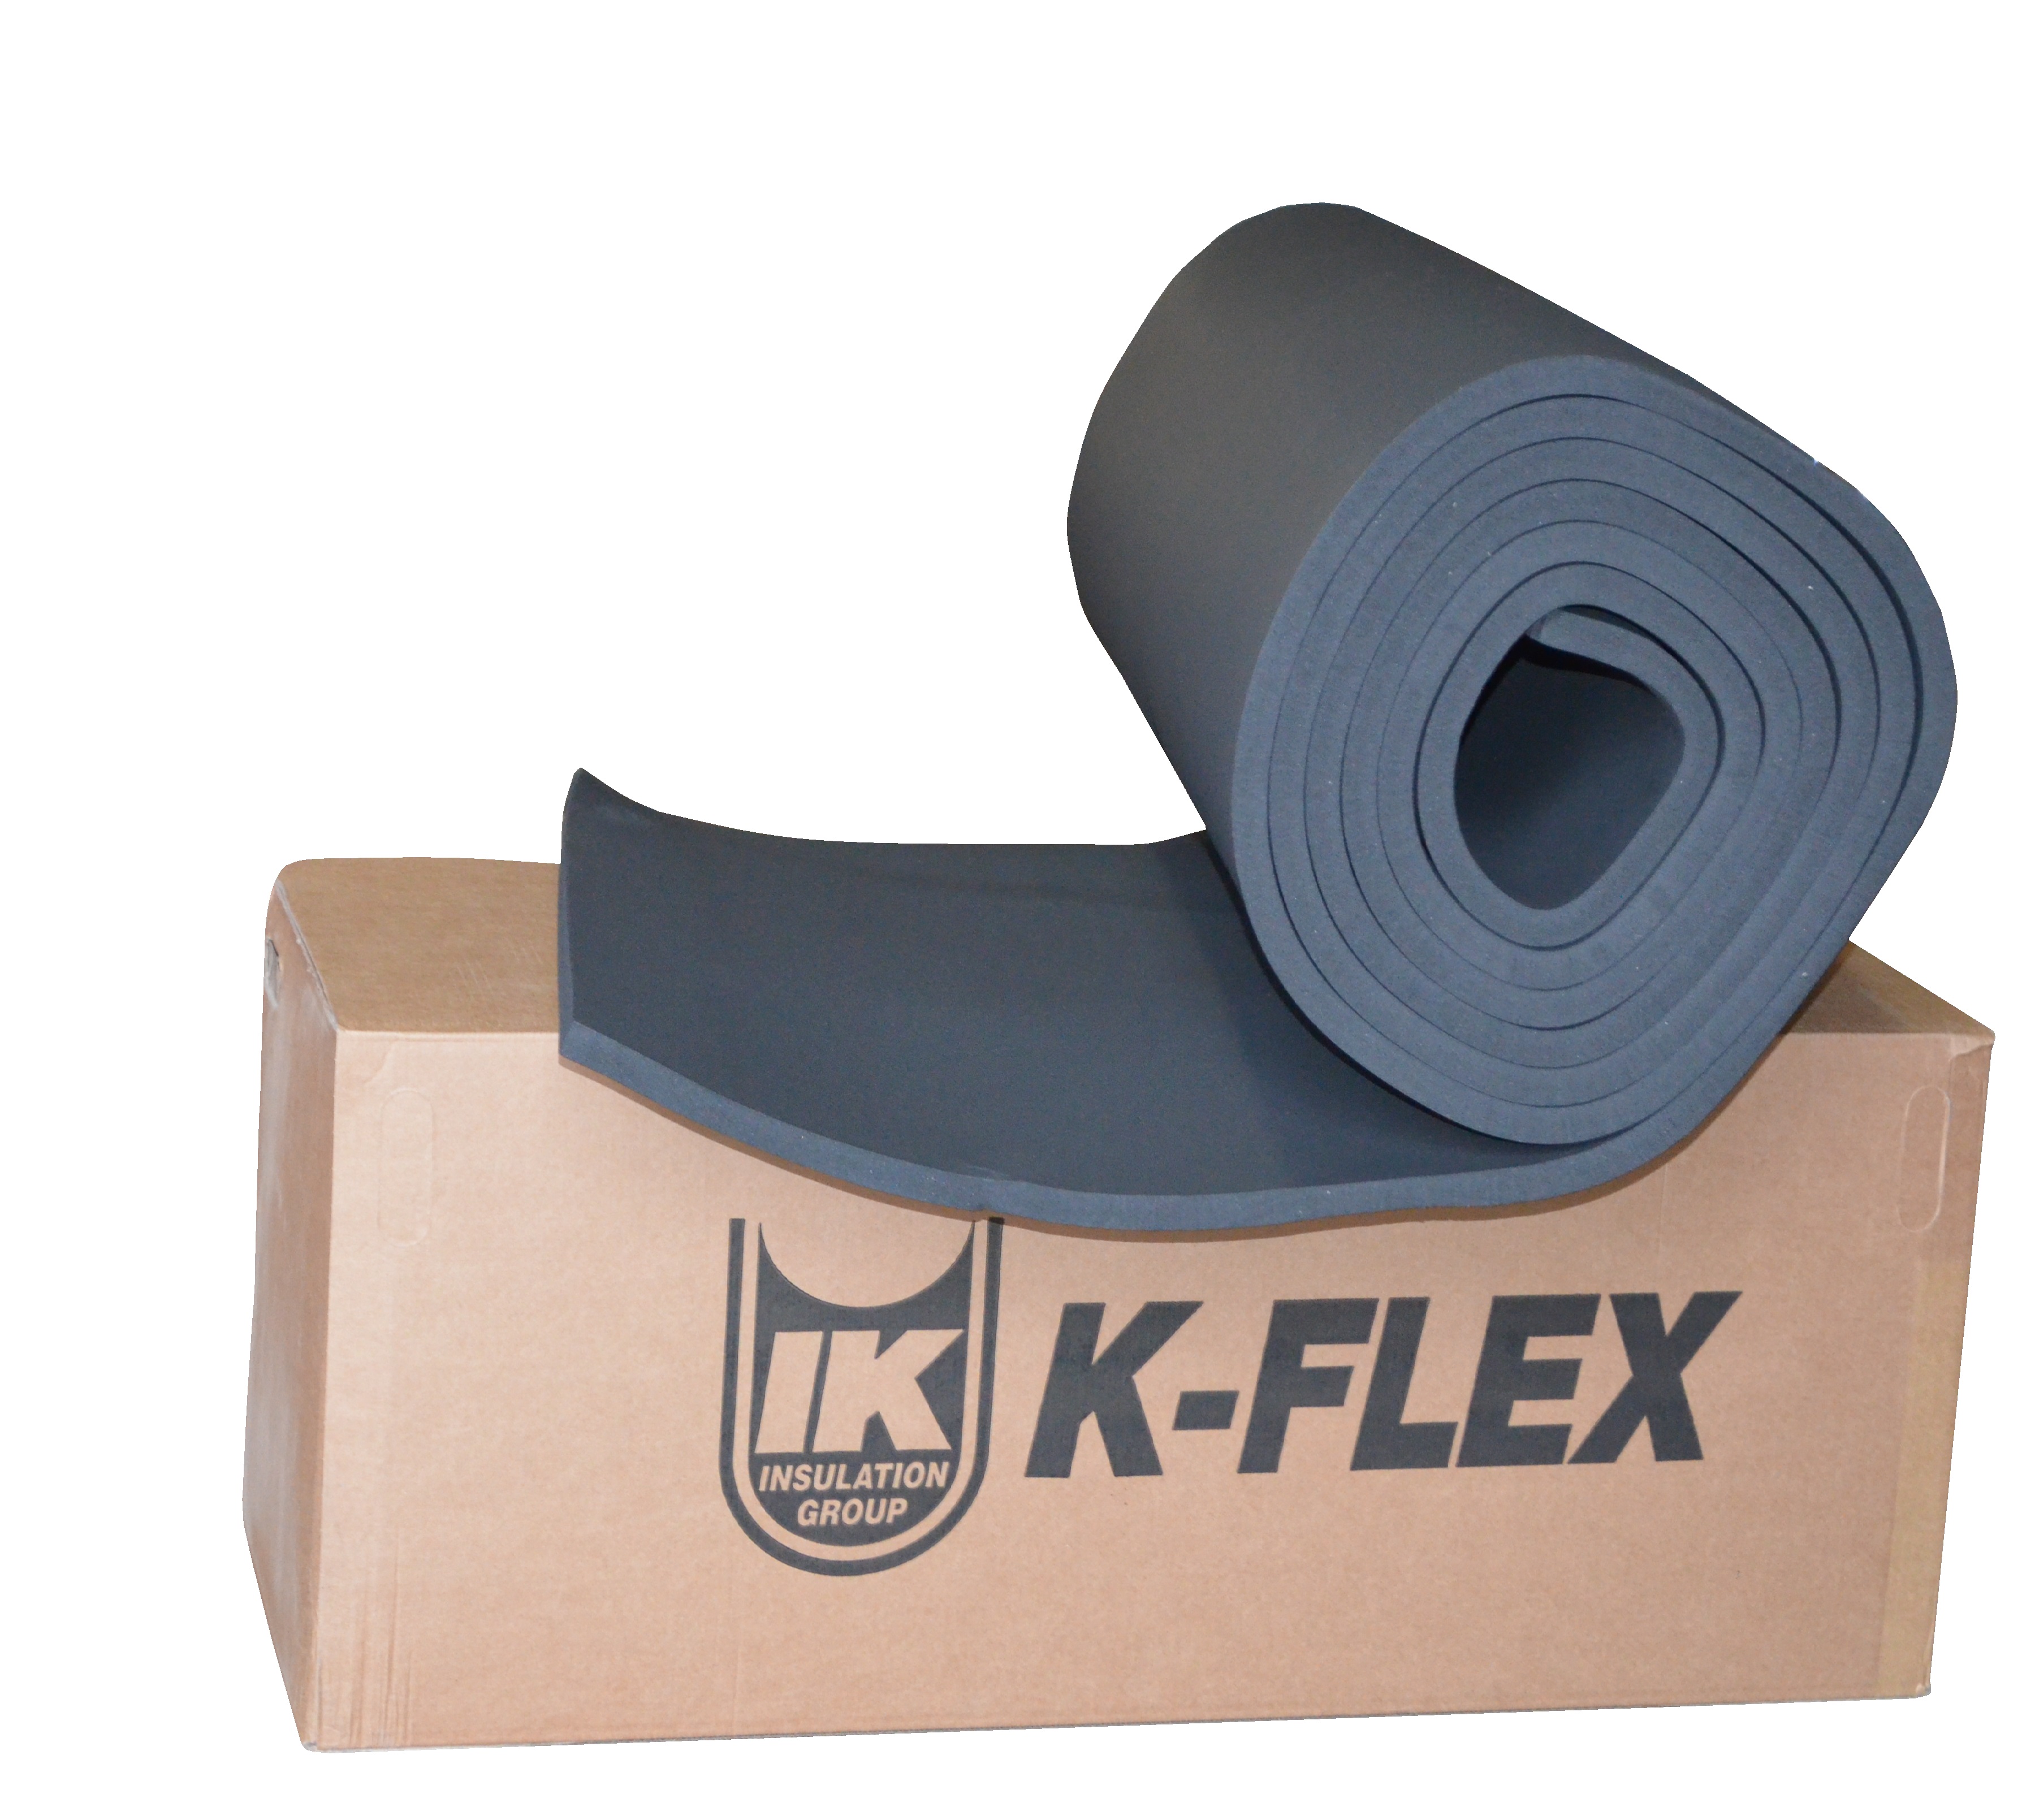 K-Flex lying on carton